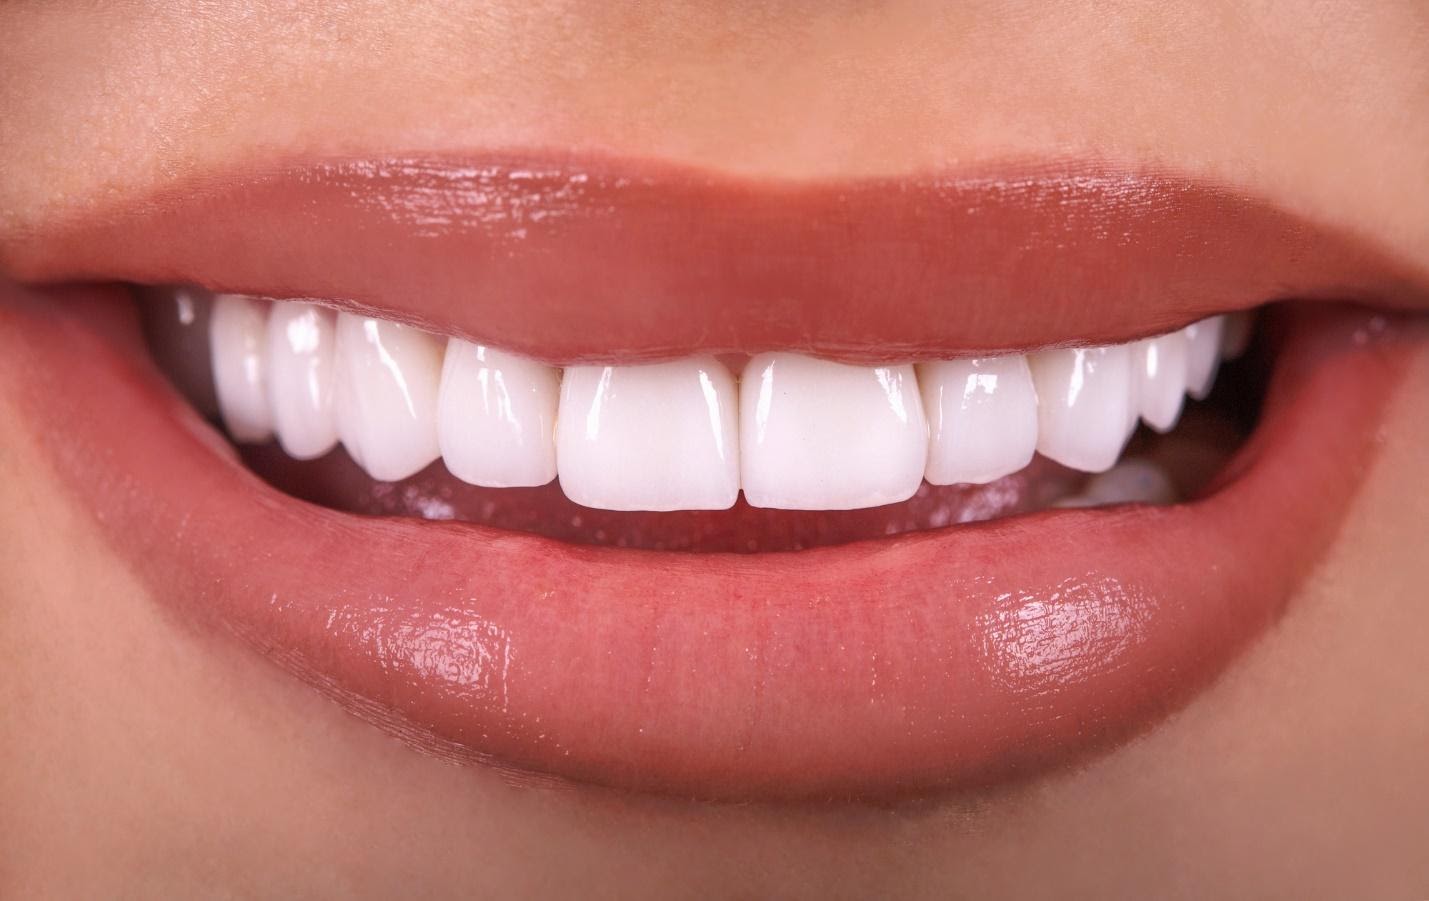 The Top Concern Patients Have About Dental Veneers